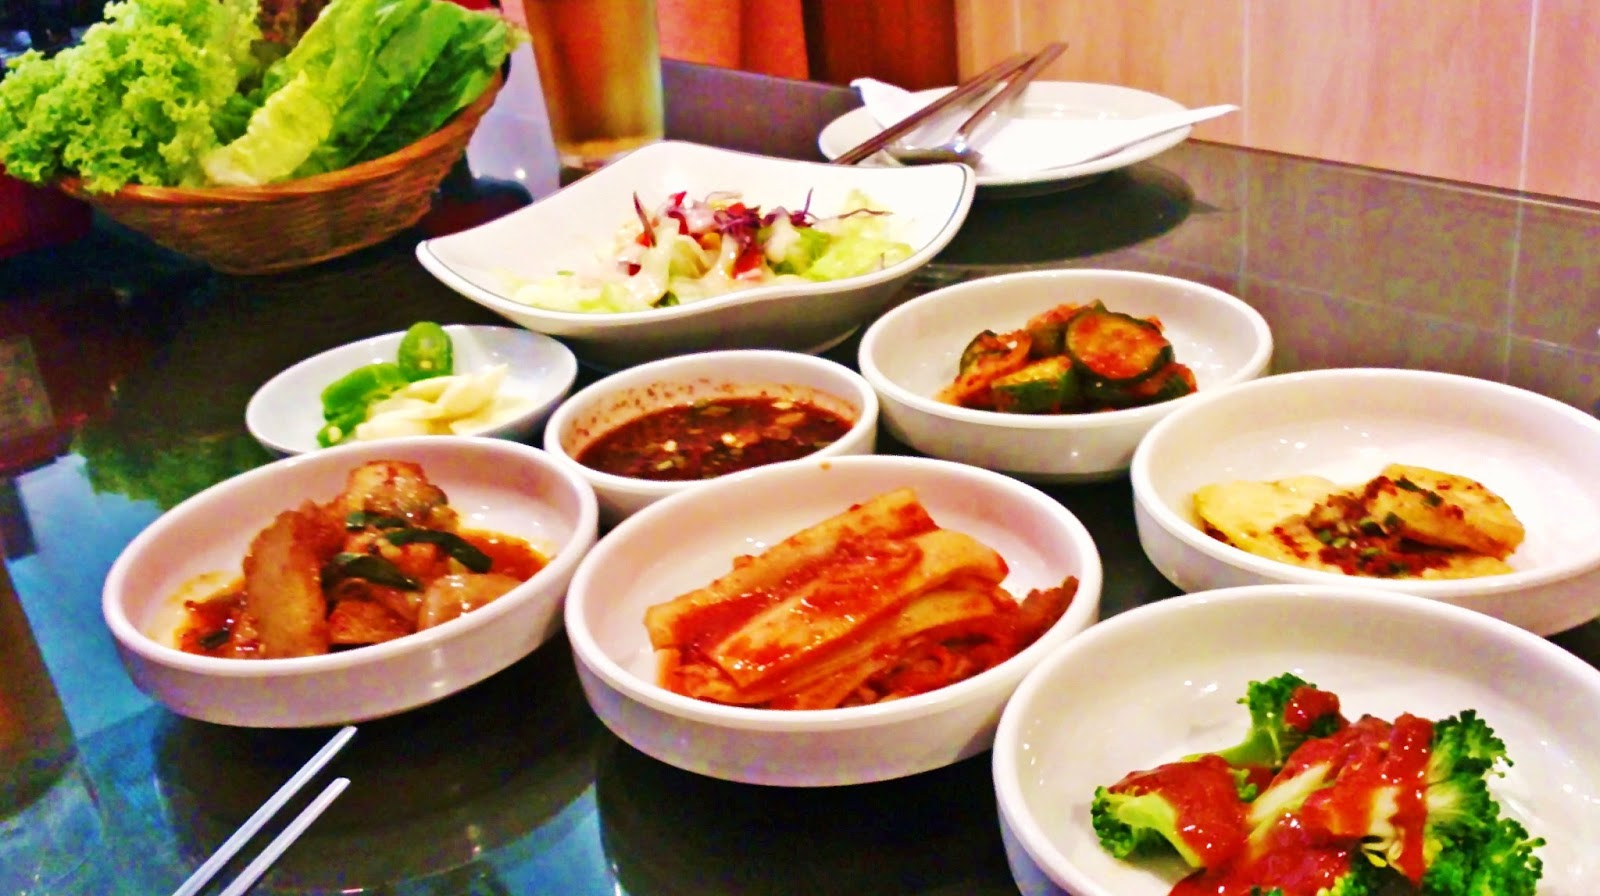 Yae Won Korean Restaurant @ Medan Ipoh | Lost Human Anatomy